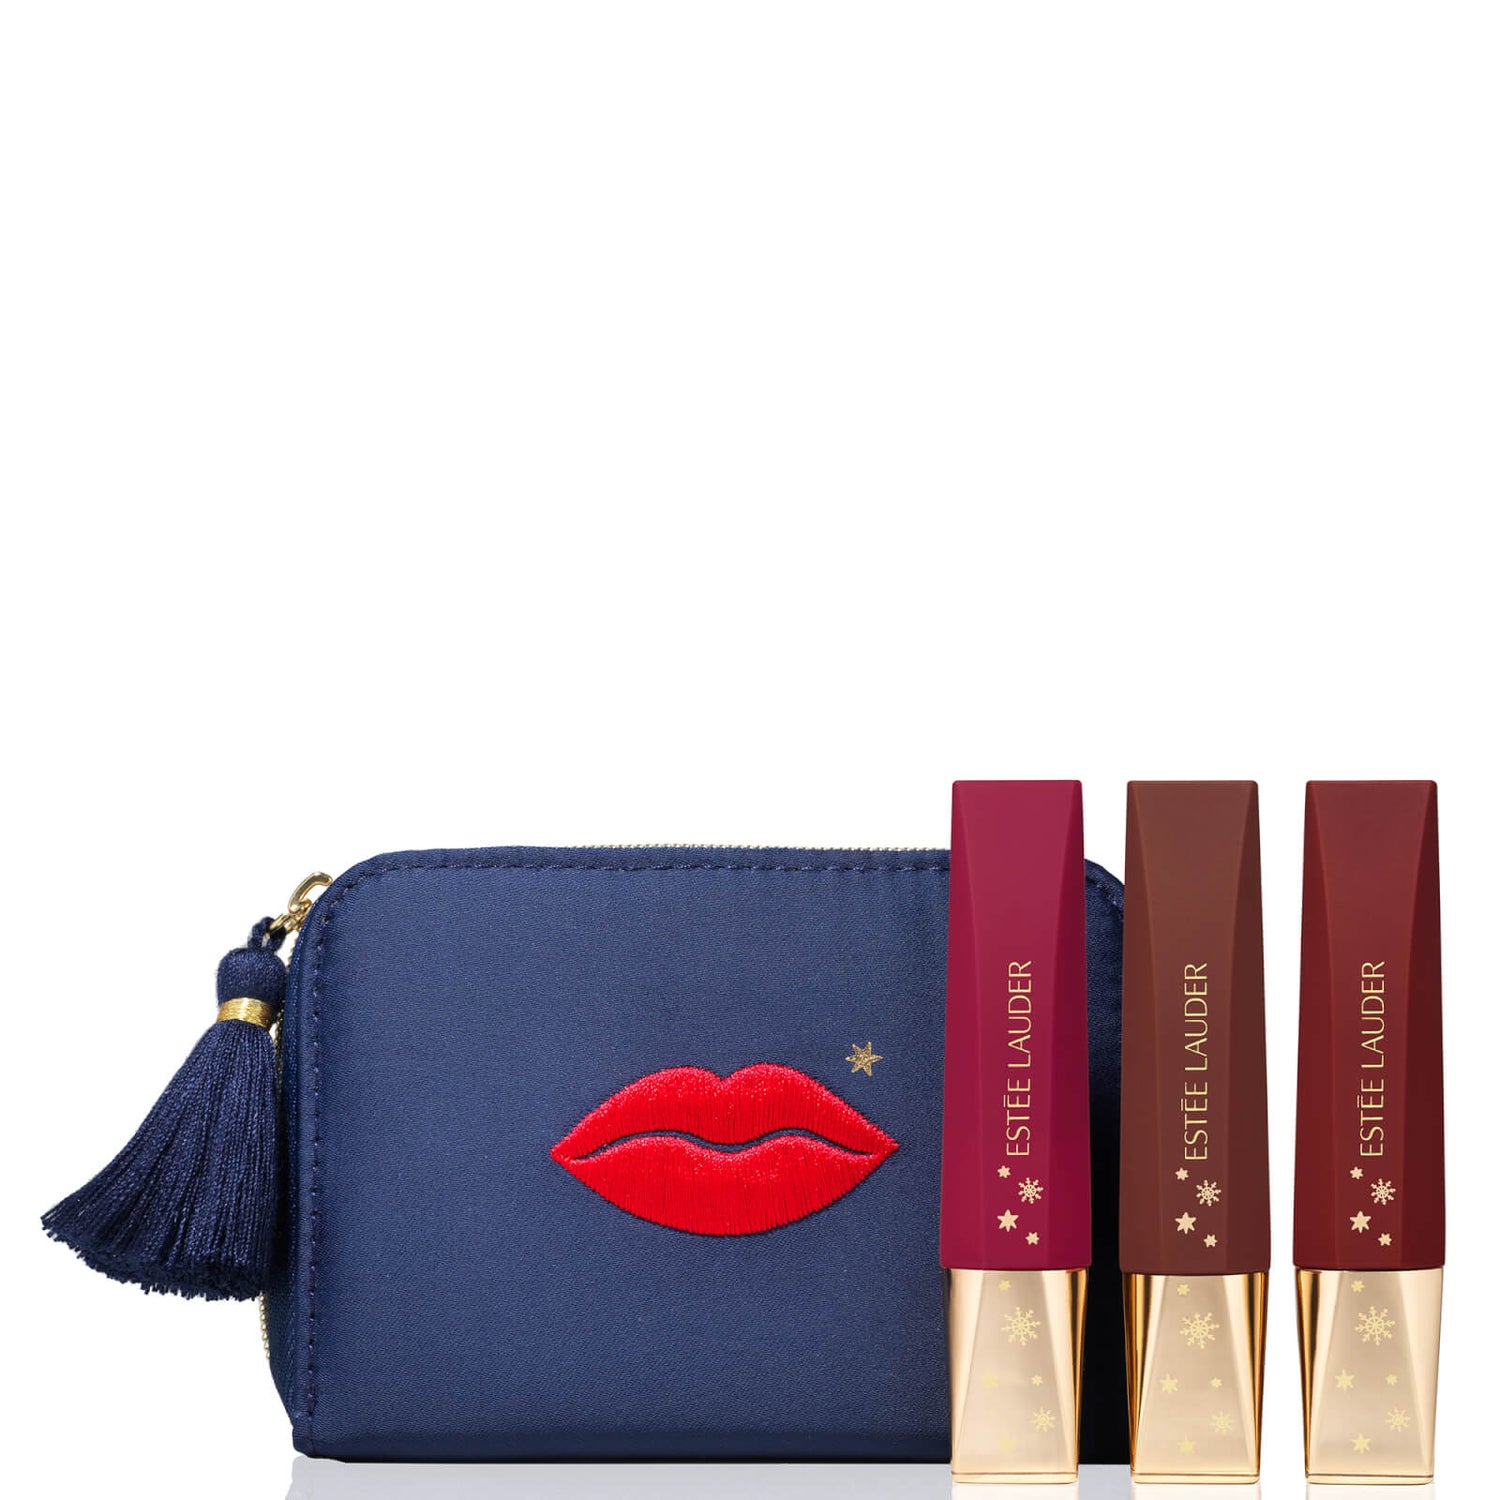 Estee Lauder Super Plush Lips Gift Set (Worth 111€)